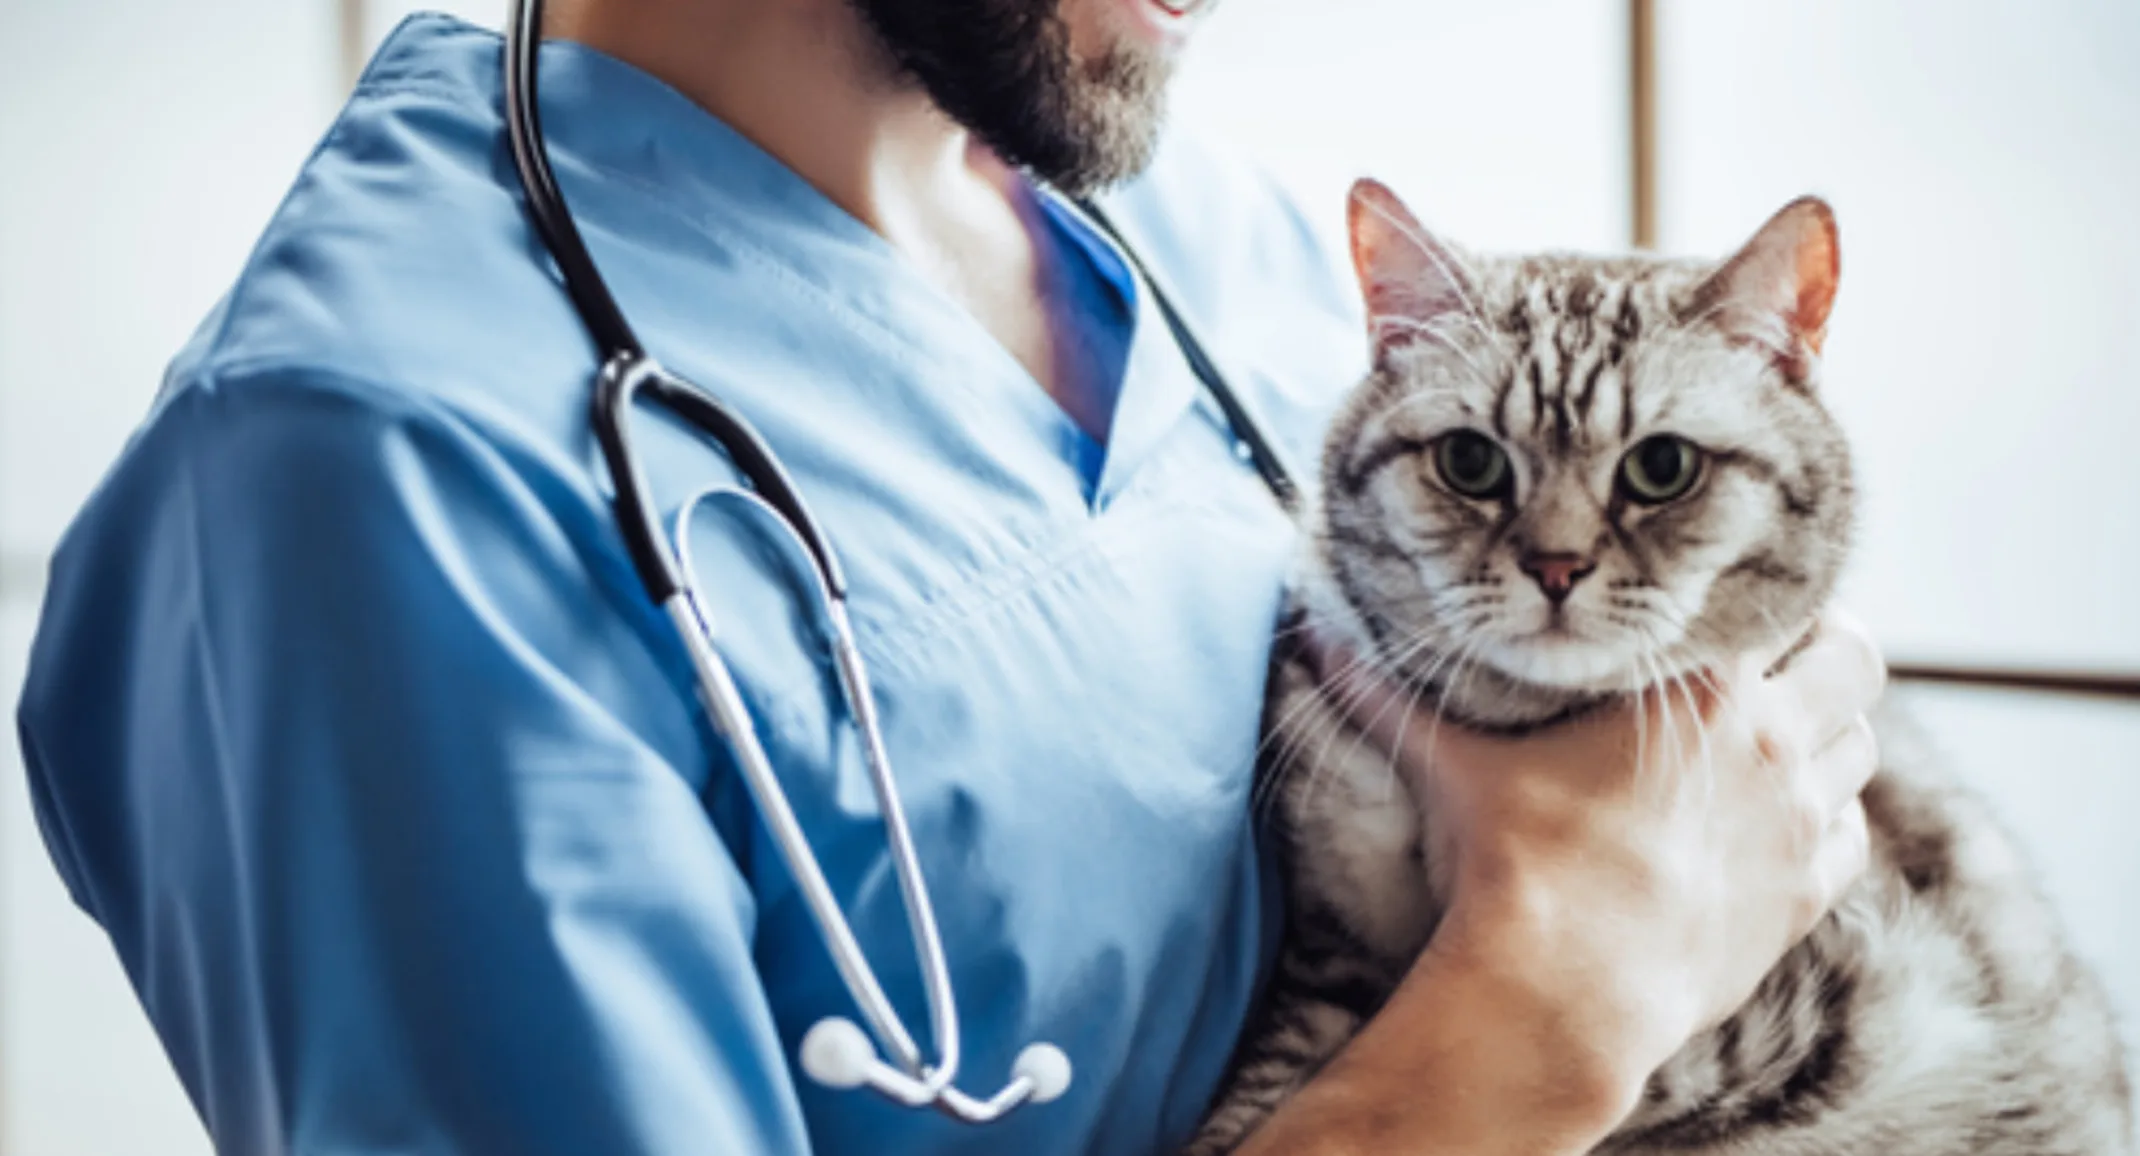 Veterinarian Holding a Gray Cat